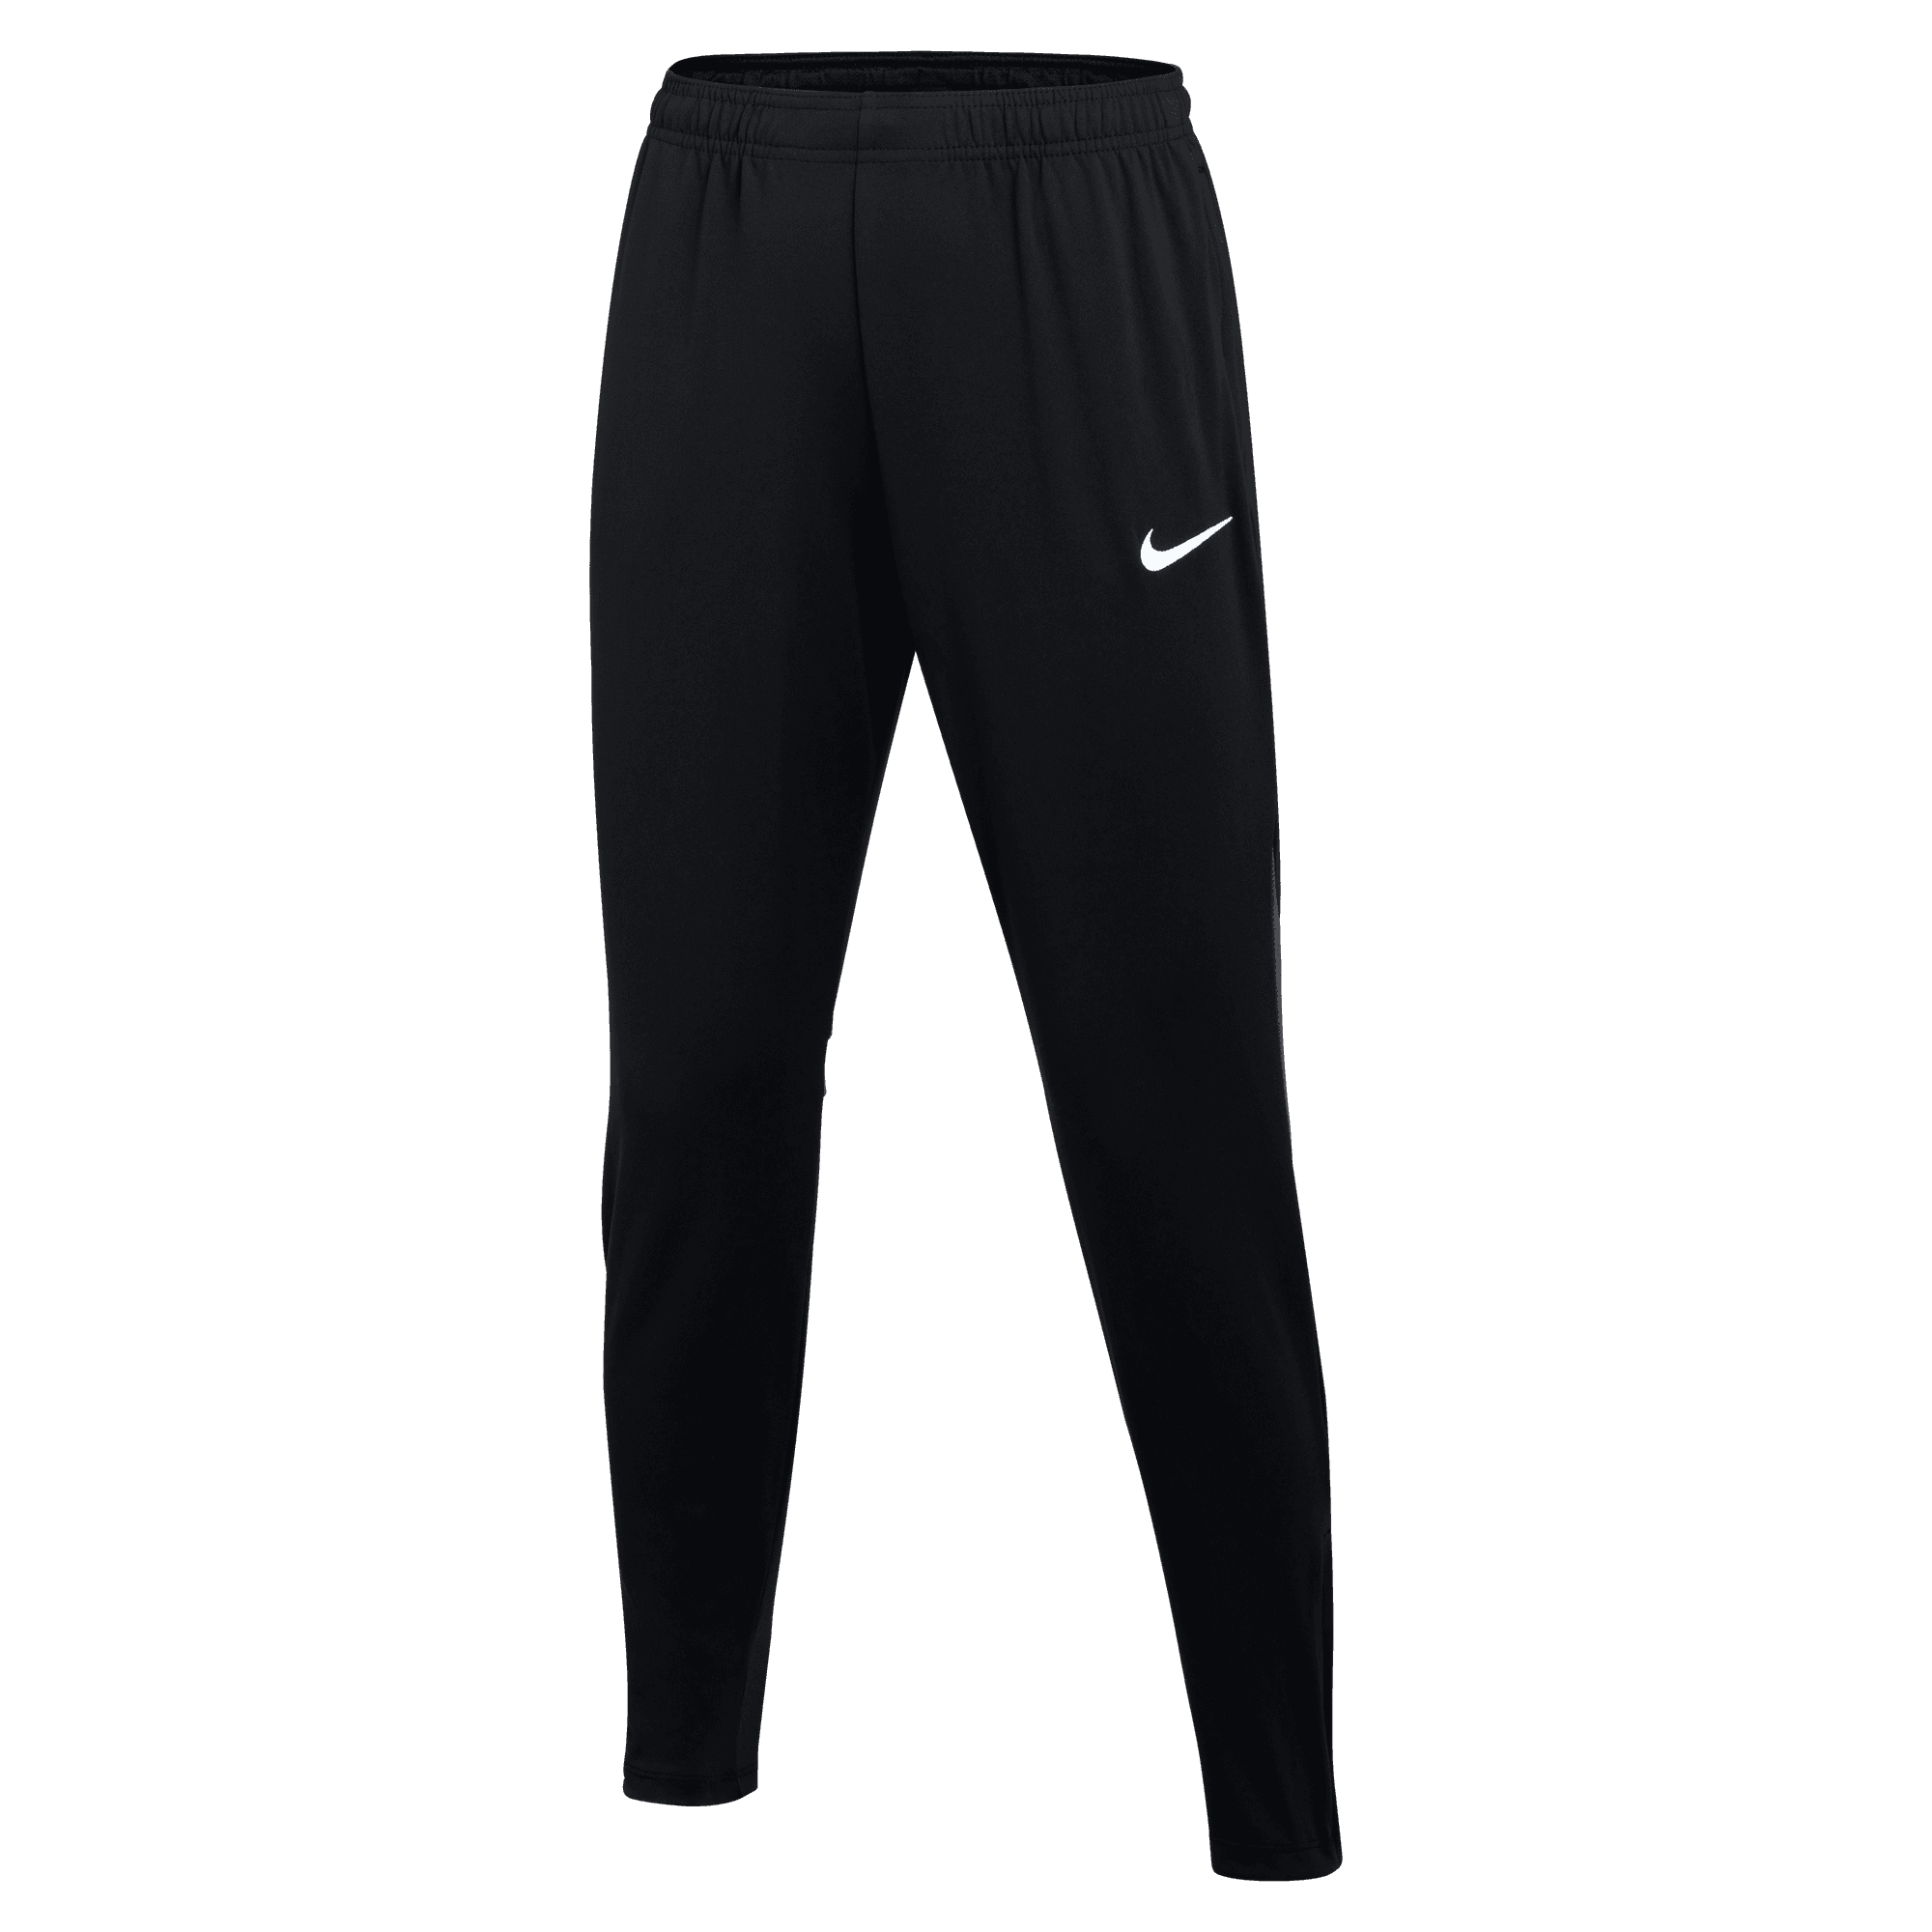 Nike Women's Dri-FIT Academy Pro Pant - DH9273-014 - Black